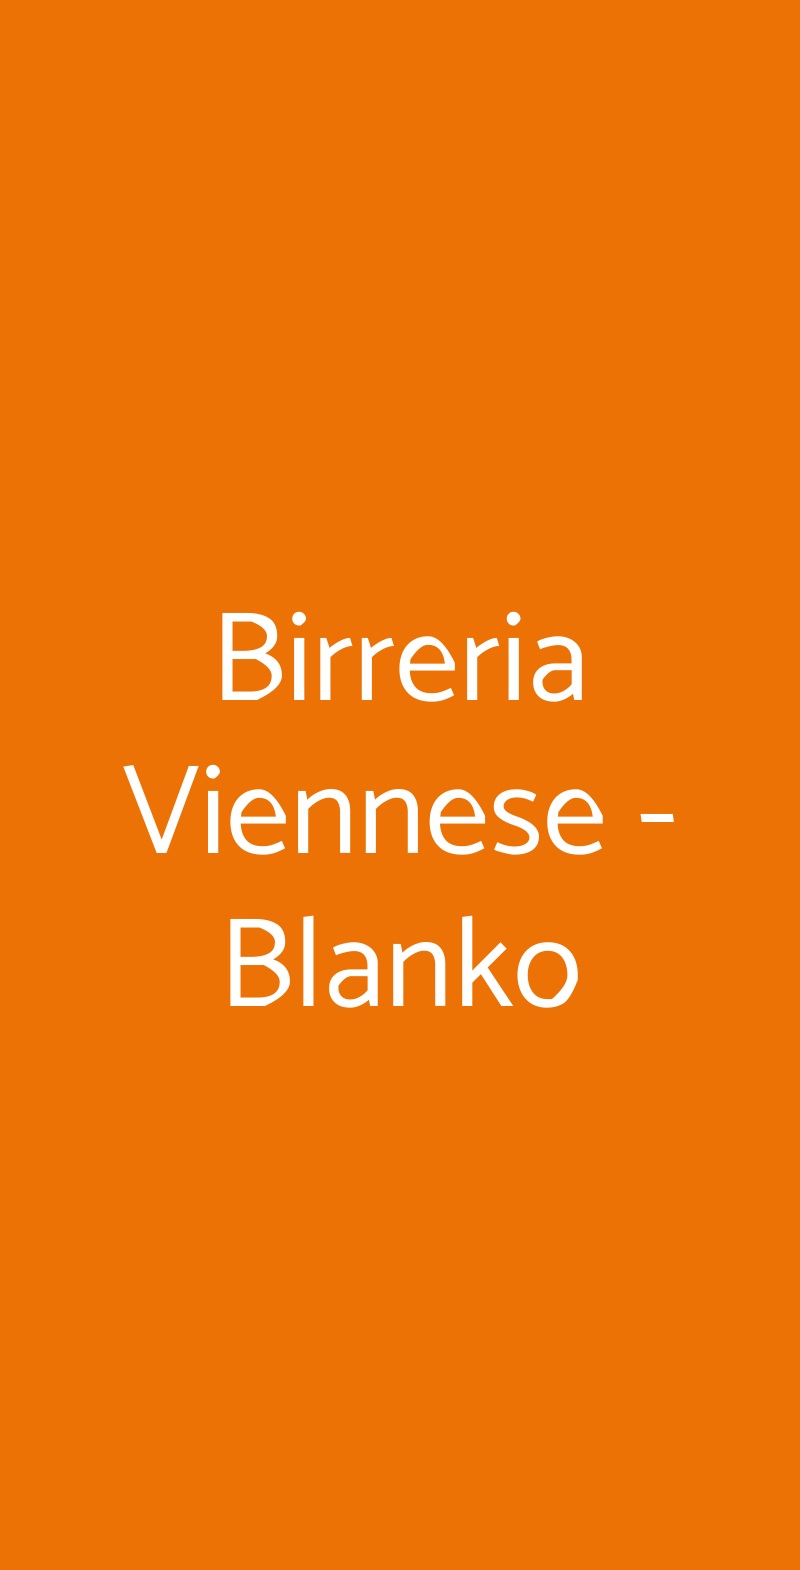 Birreria Viennese - Blanko Roma menù 1 pagina